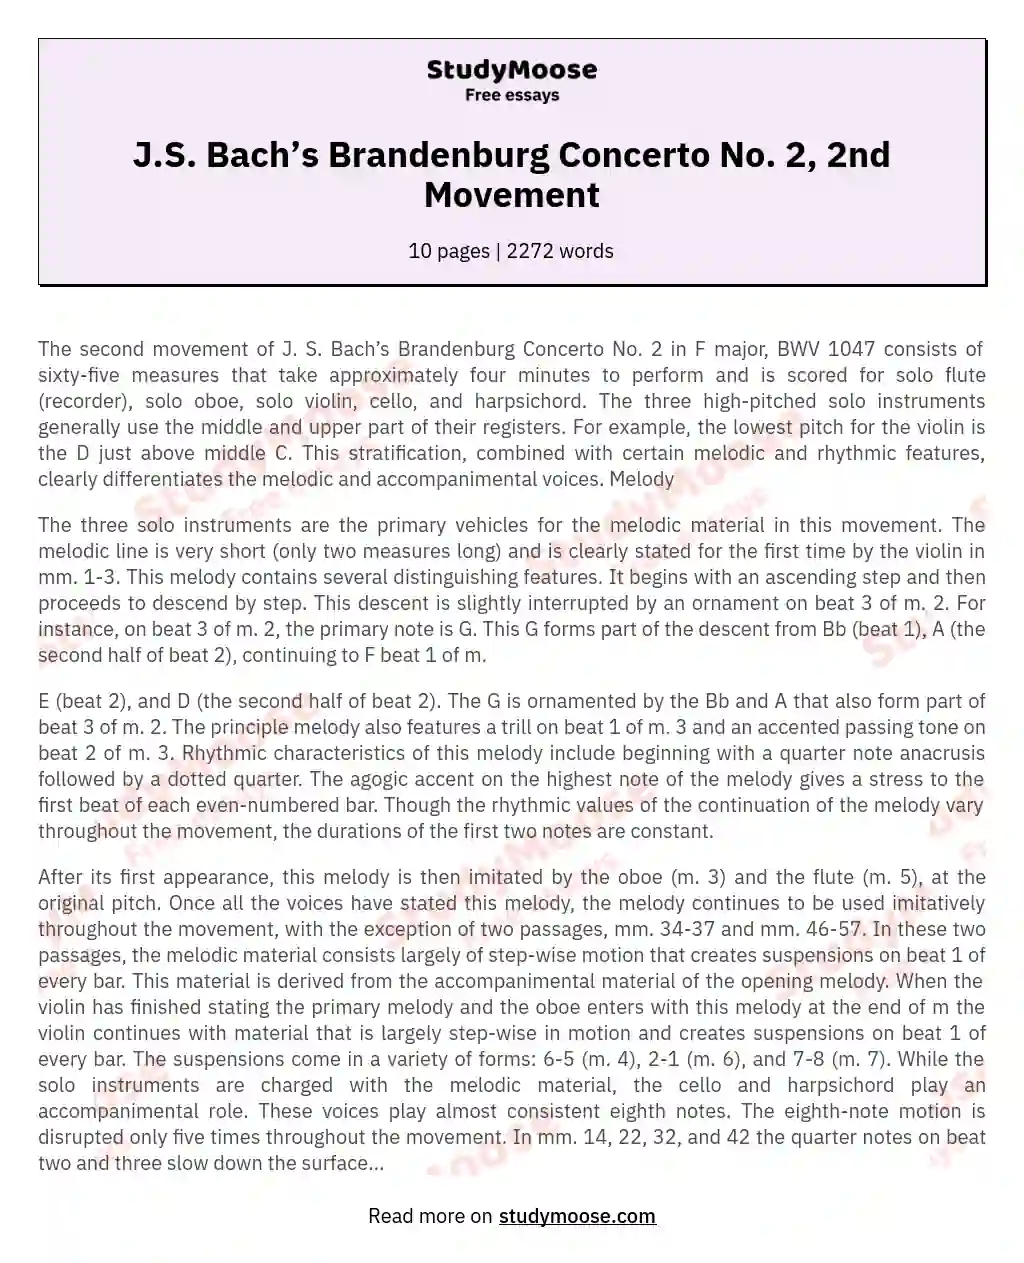 J.S. Bach’s Brandenburg Concerto No. 2, 2nd Movement essay